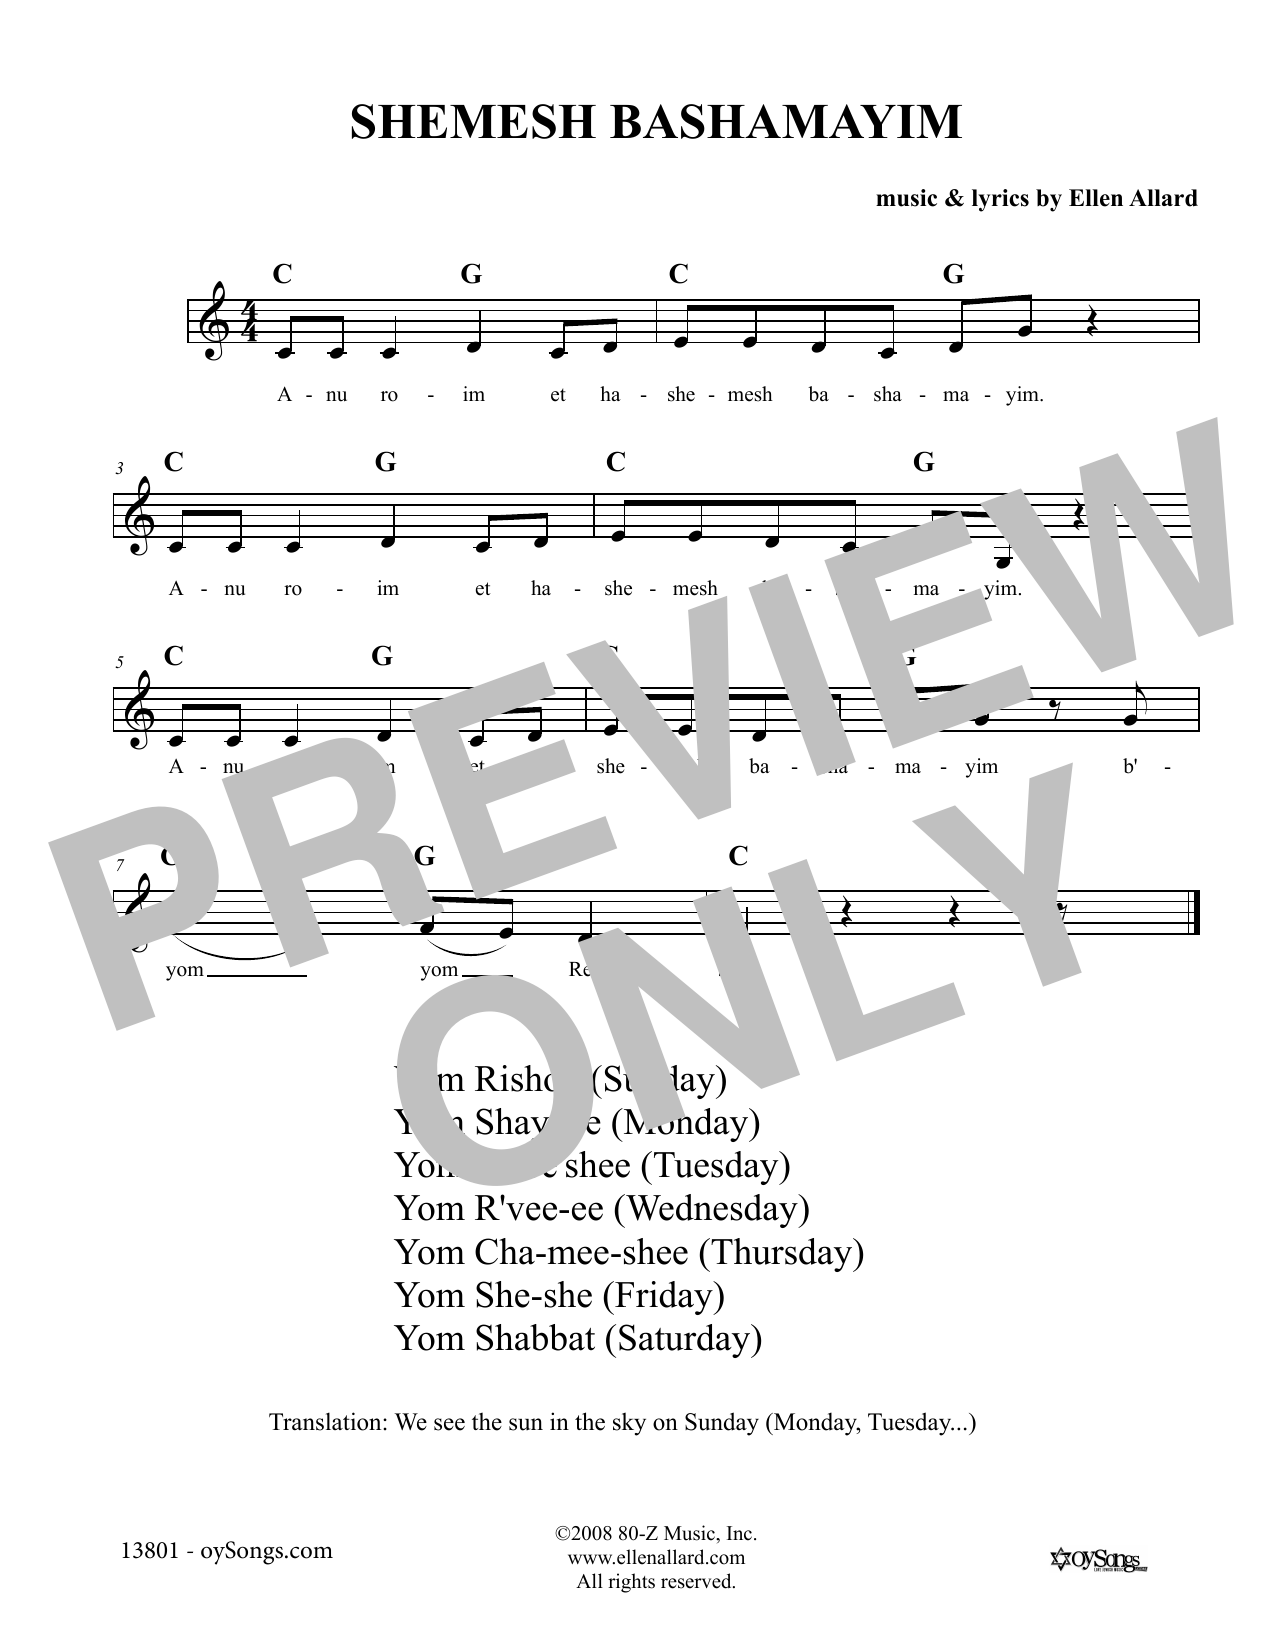 Ellen Allard Shemesh Bashamayim Sheet Music Notes & Chords for Melody Line, Lyrics & Chords - Download or Print PDF